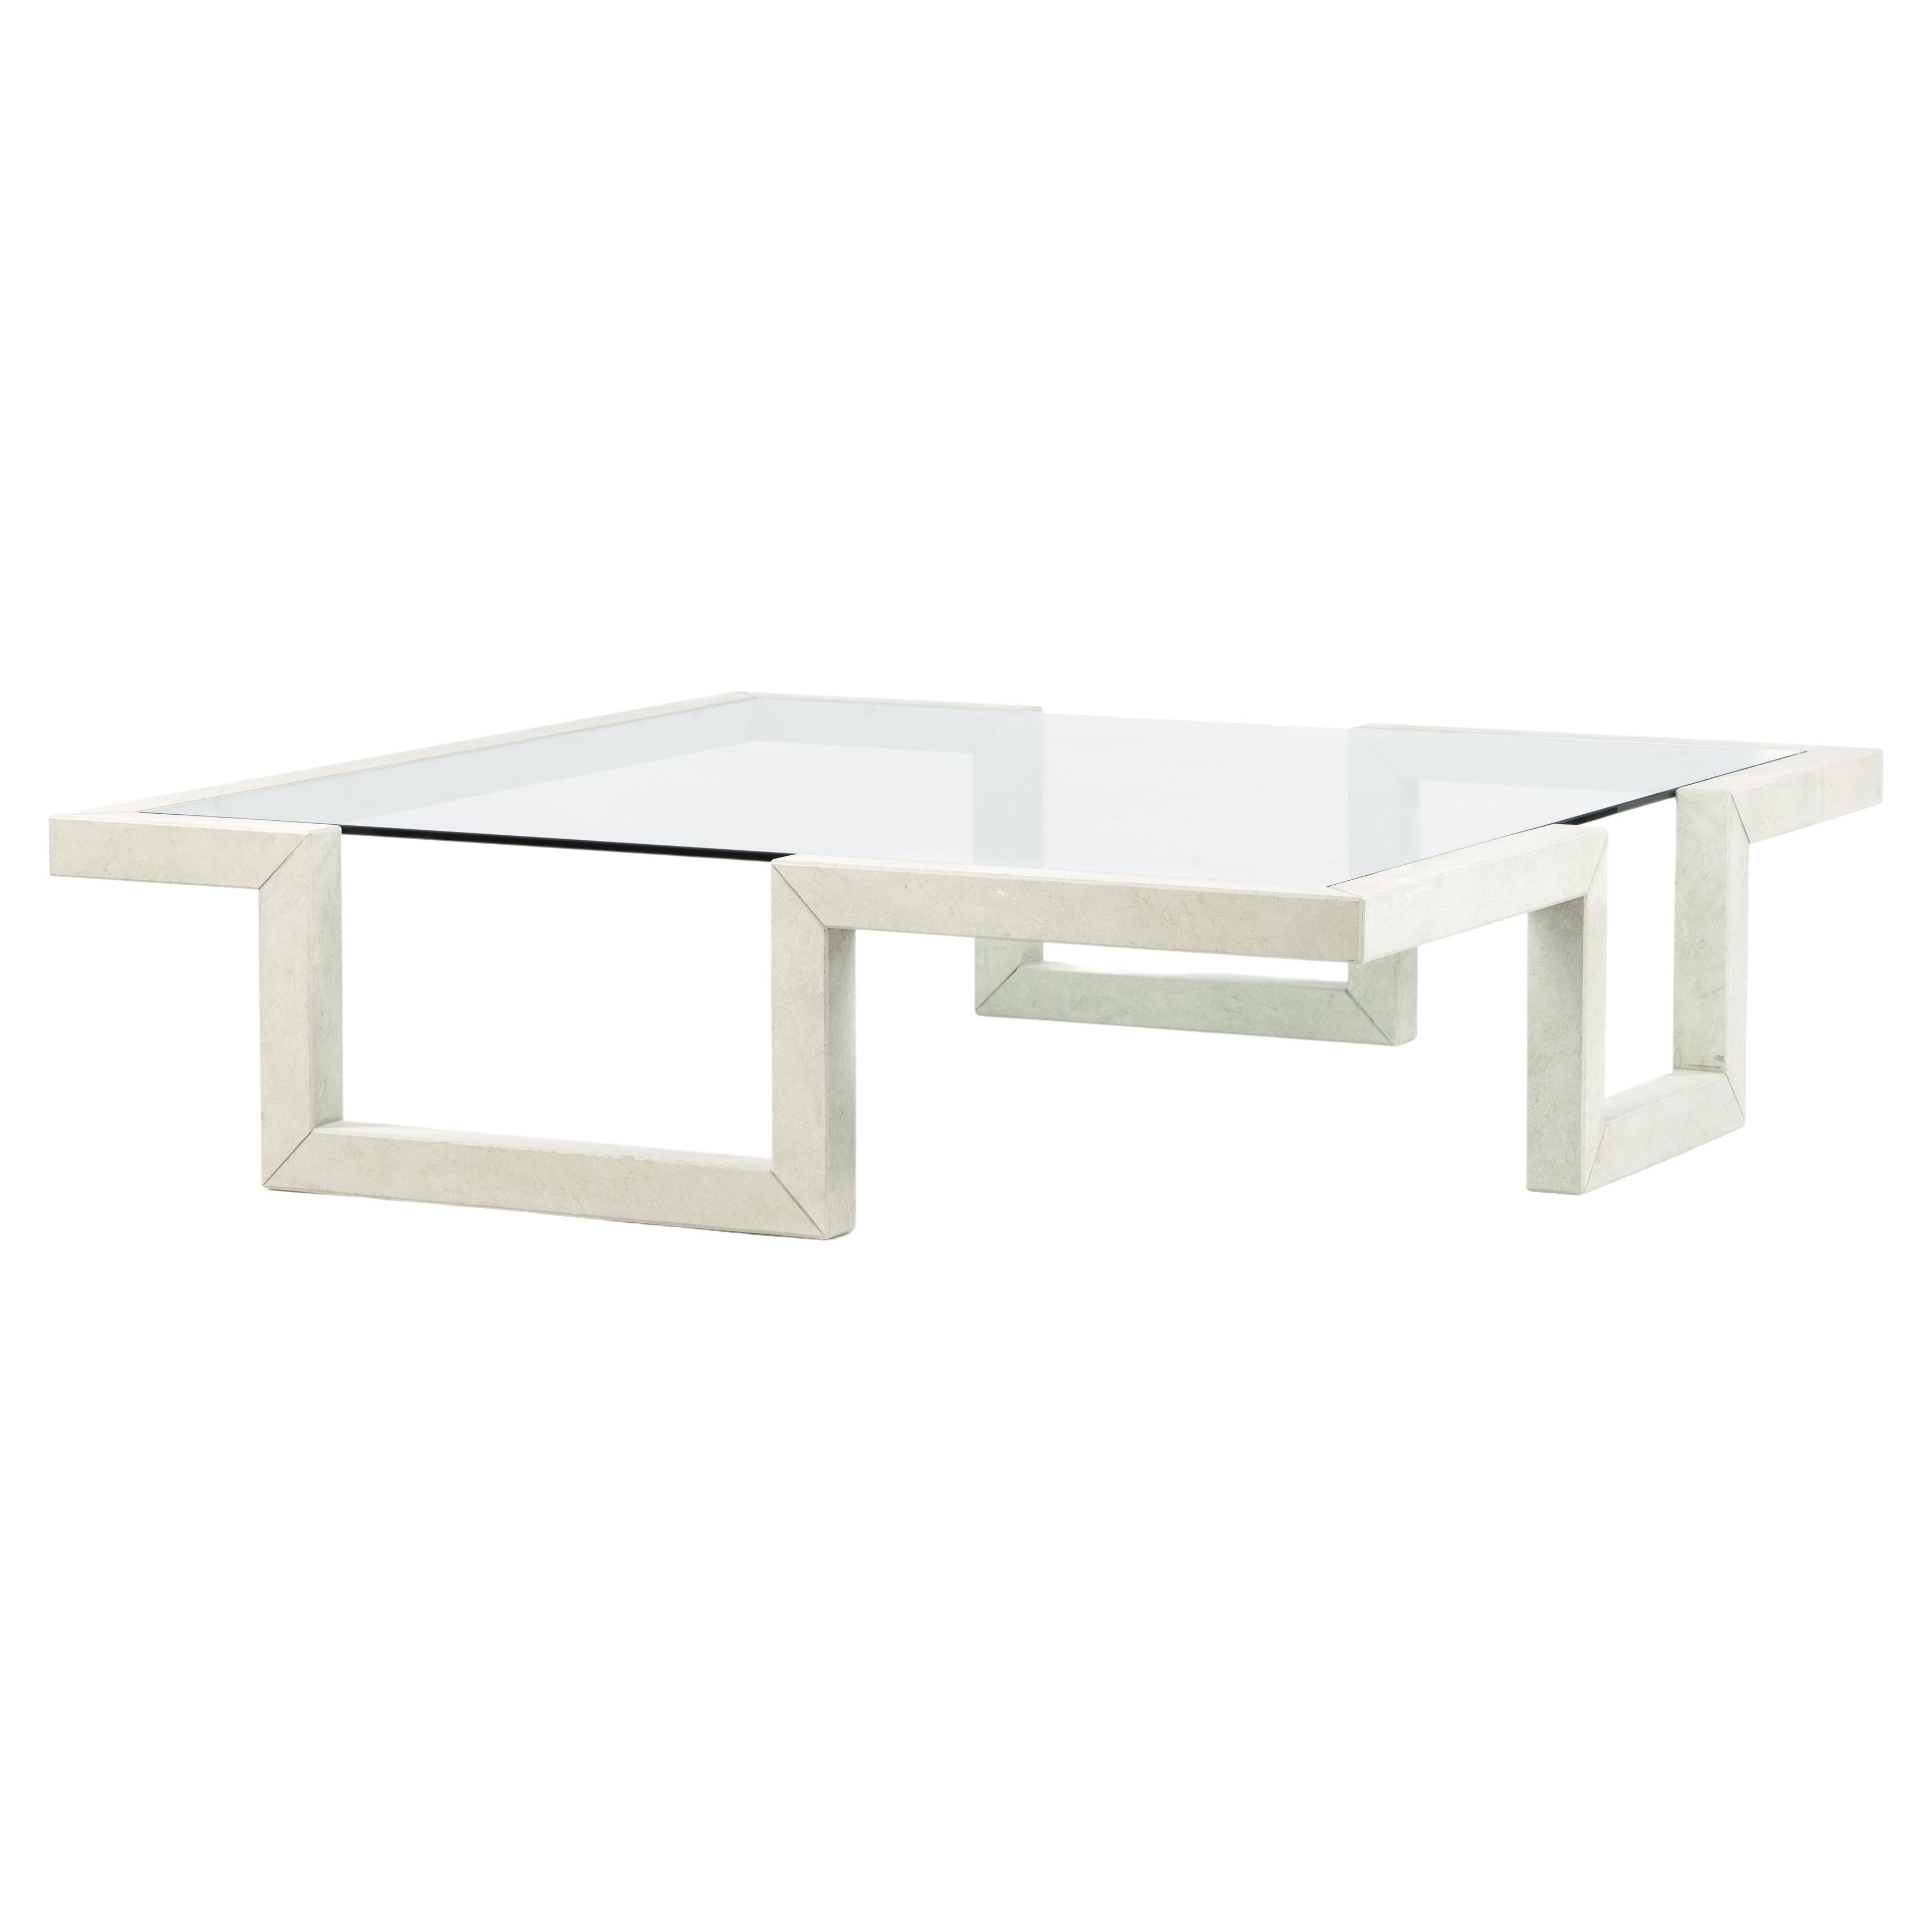 Collection de tables basses en pierre de conception contemporaine Synthesis, en stock en vente